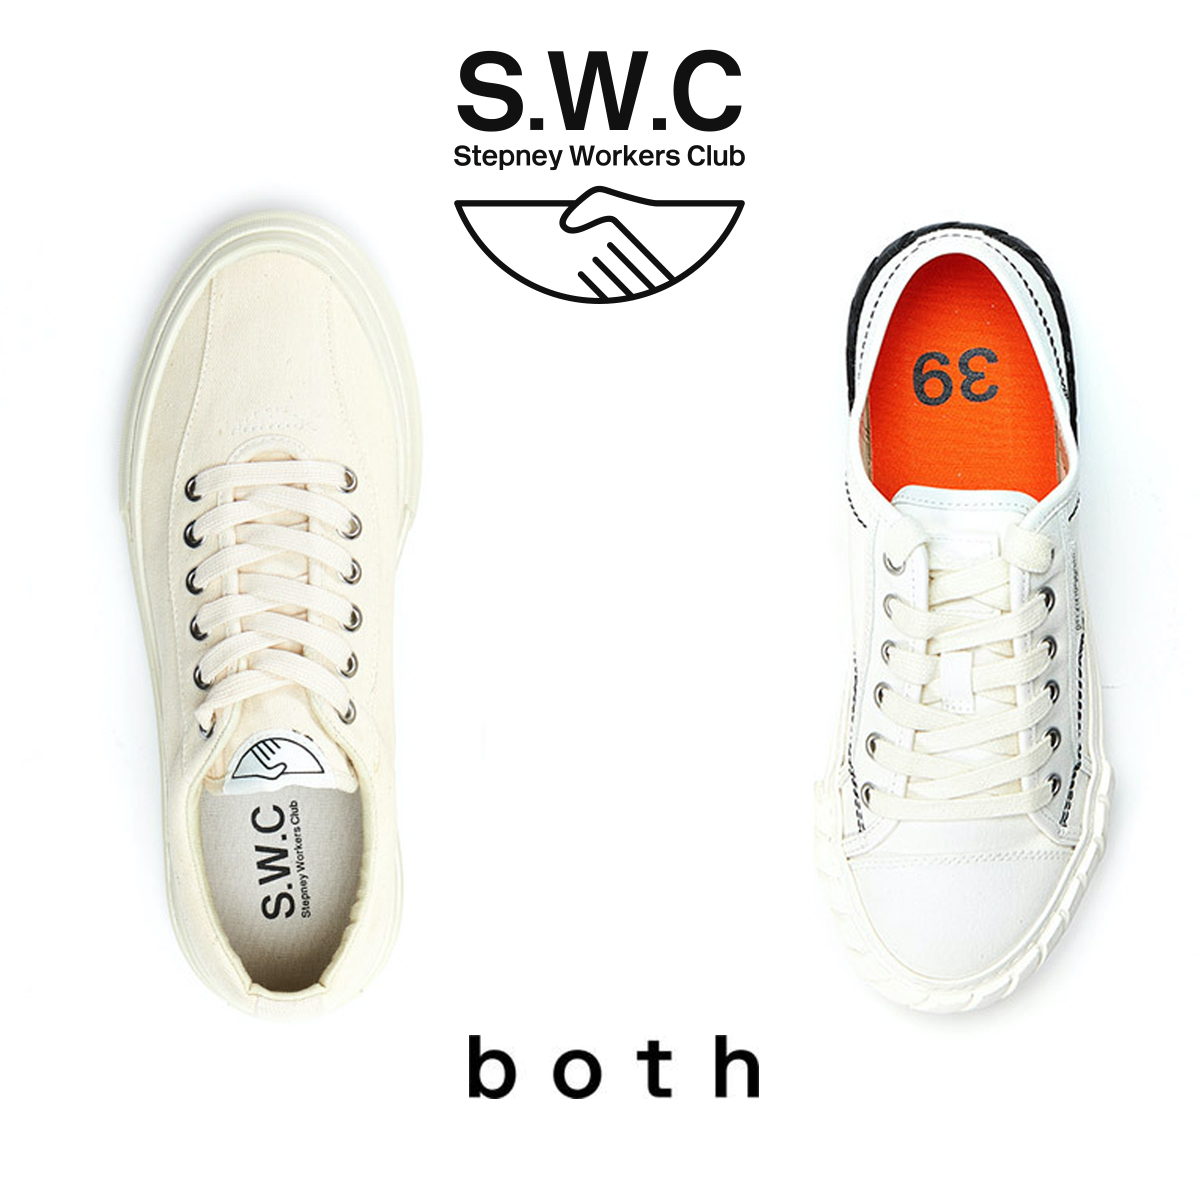 both swc